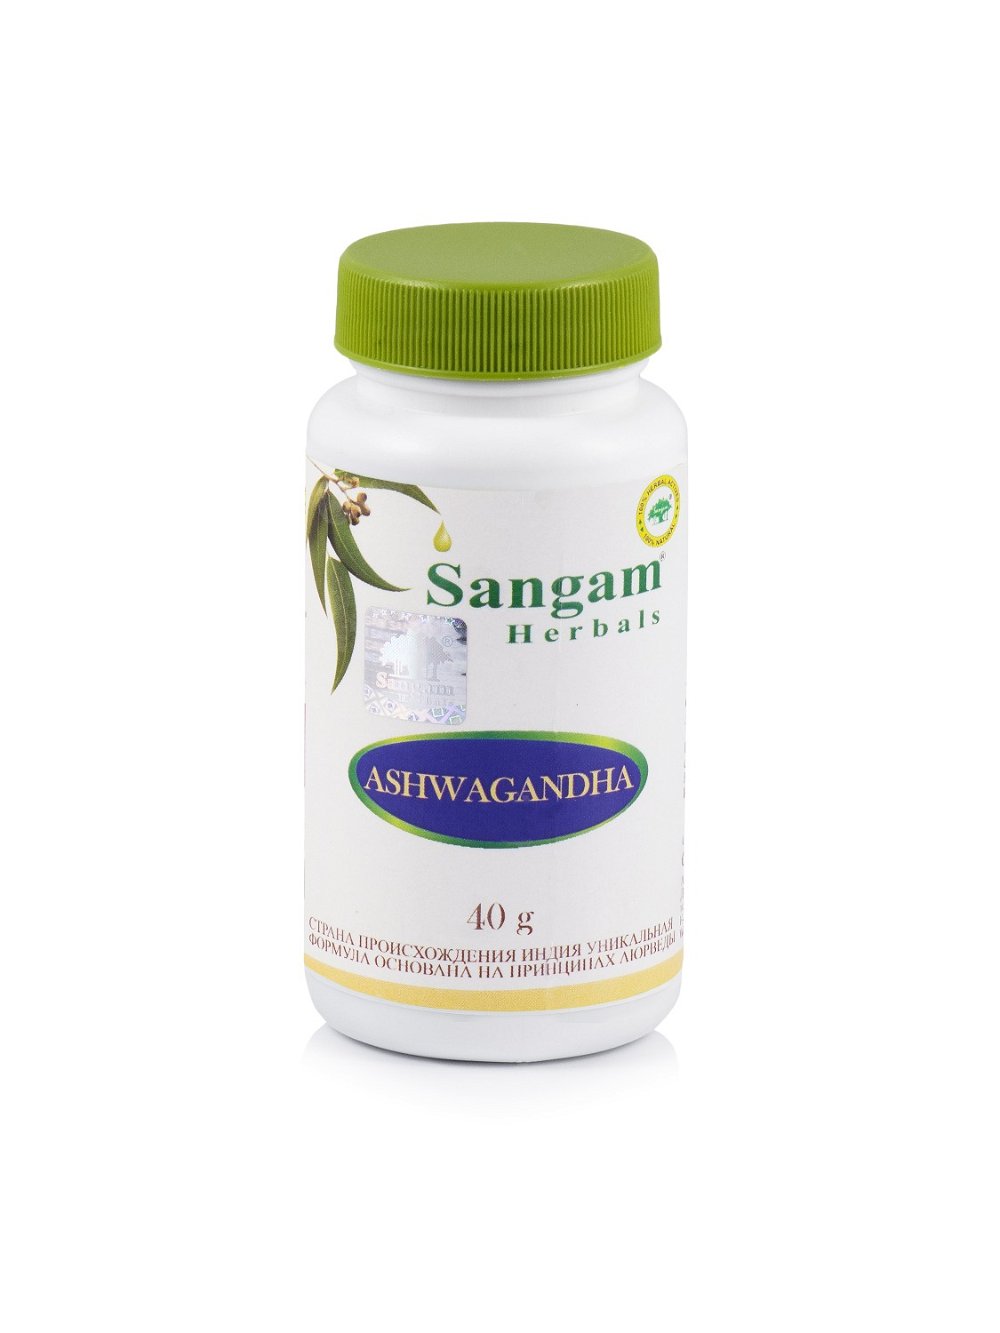 Ашваганда Sangam Herbals порошок (40 г), Ашваганда